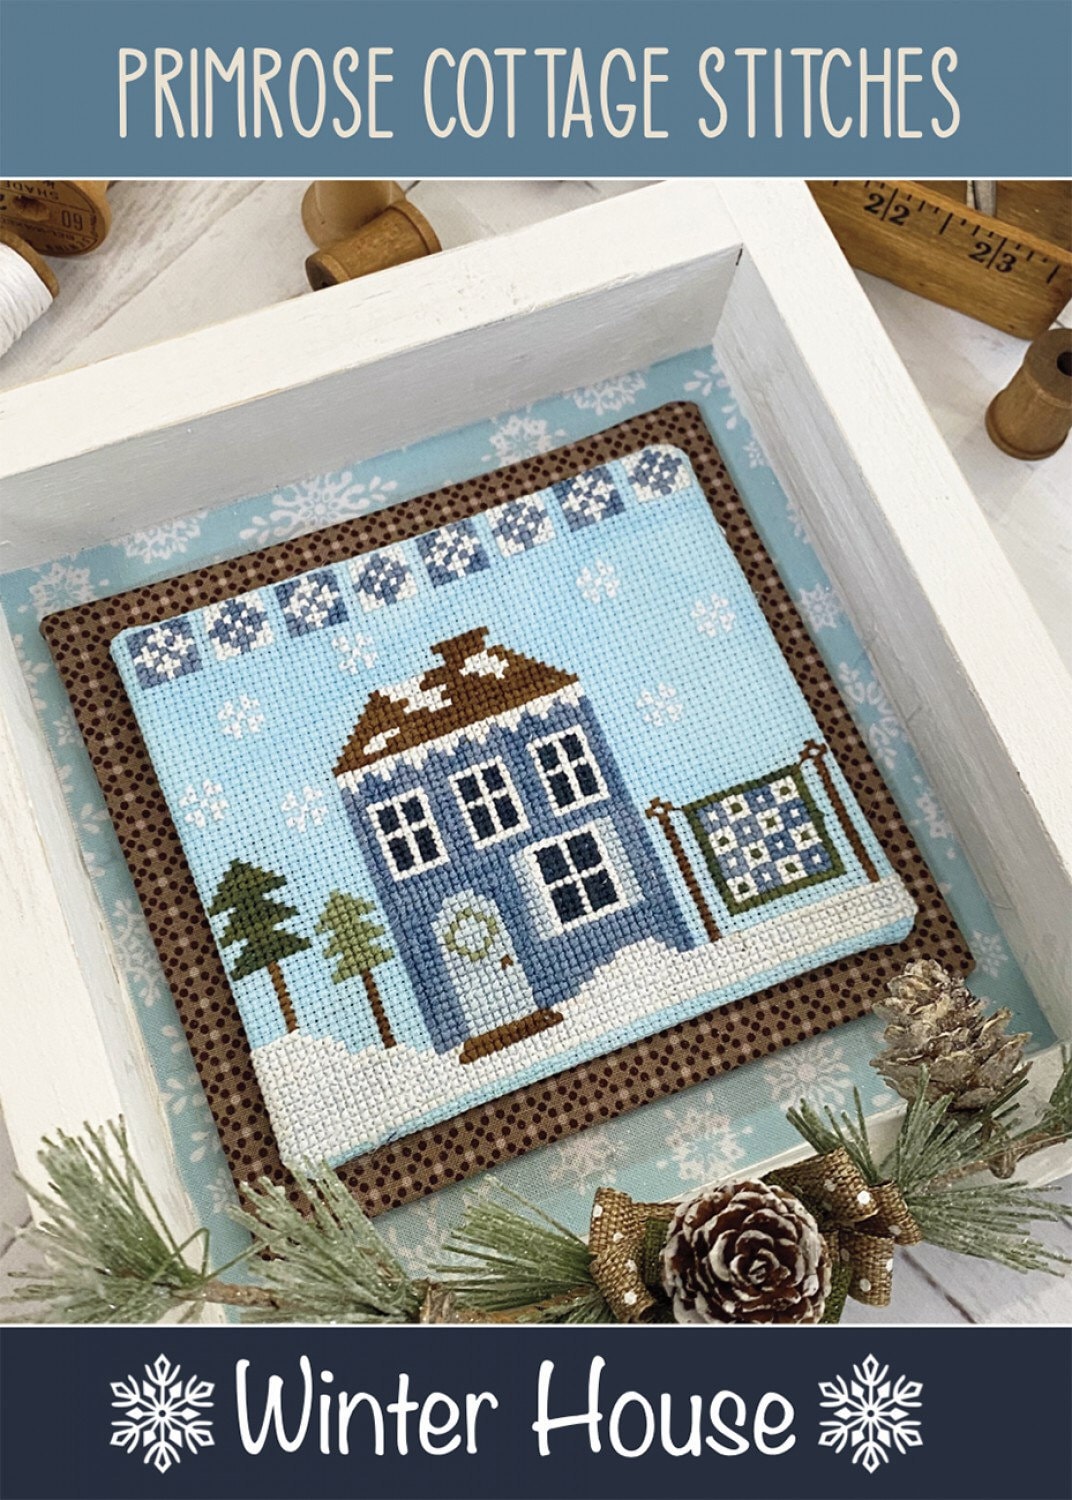 Winter House Cross Stitch Pattern - Primrose Cottage Stitches - 75 x 65 stitches